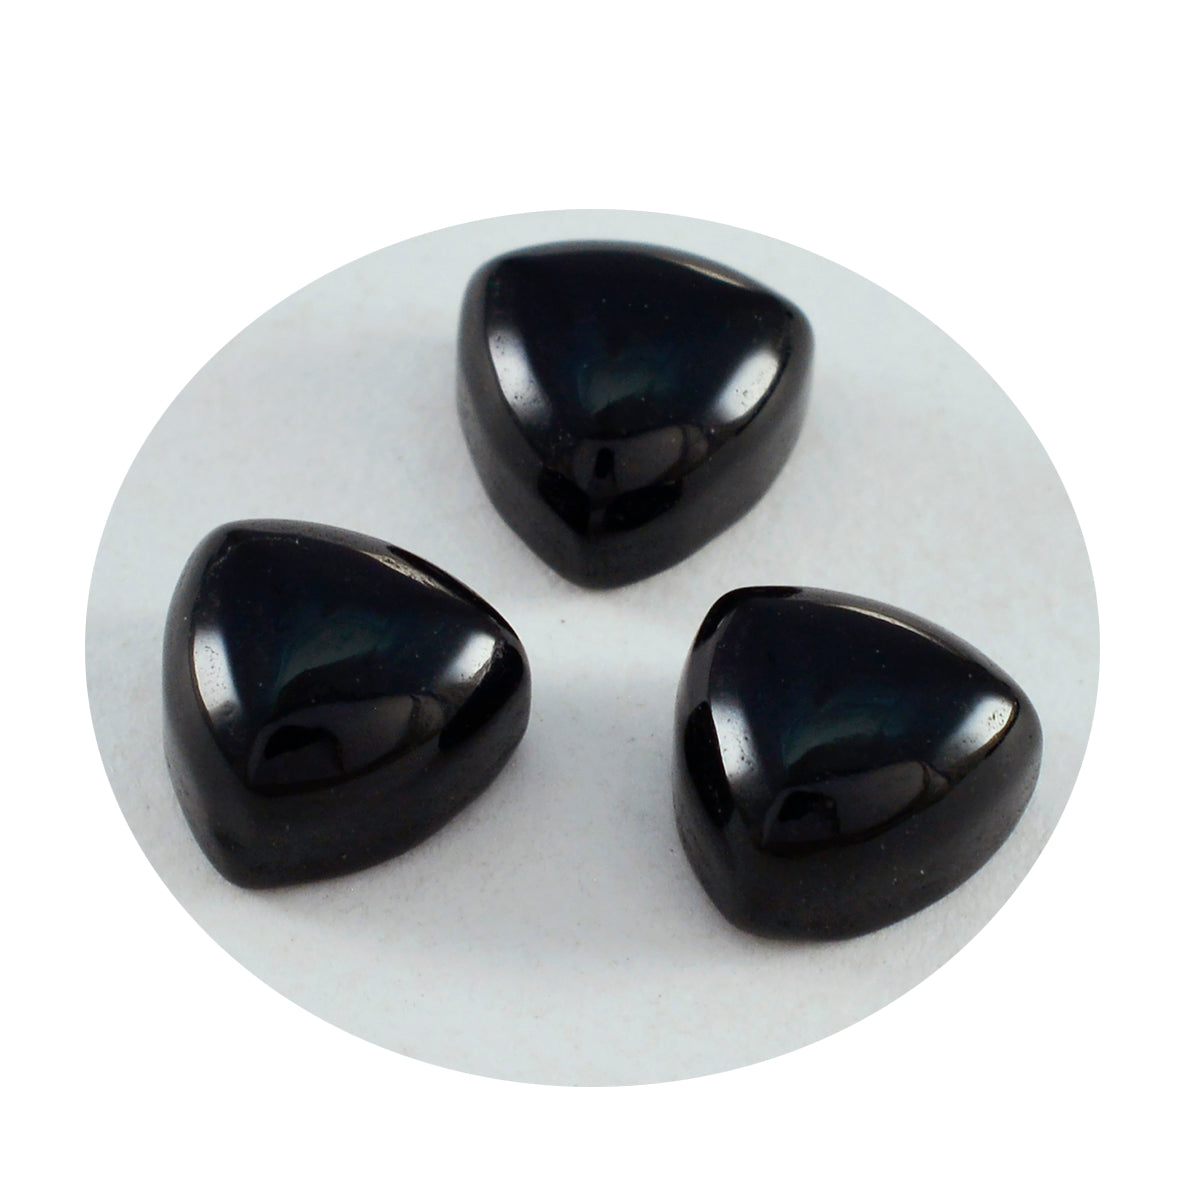 riyogems 1pc ブラック オニキス カボション 9x9 mm 兆形状 a+ 品質石